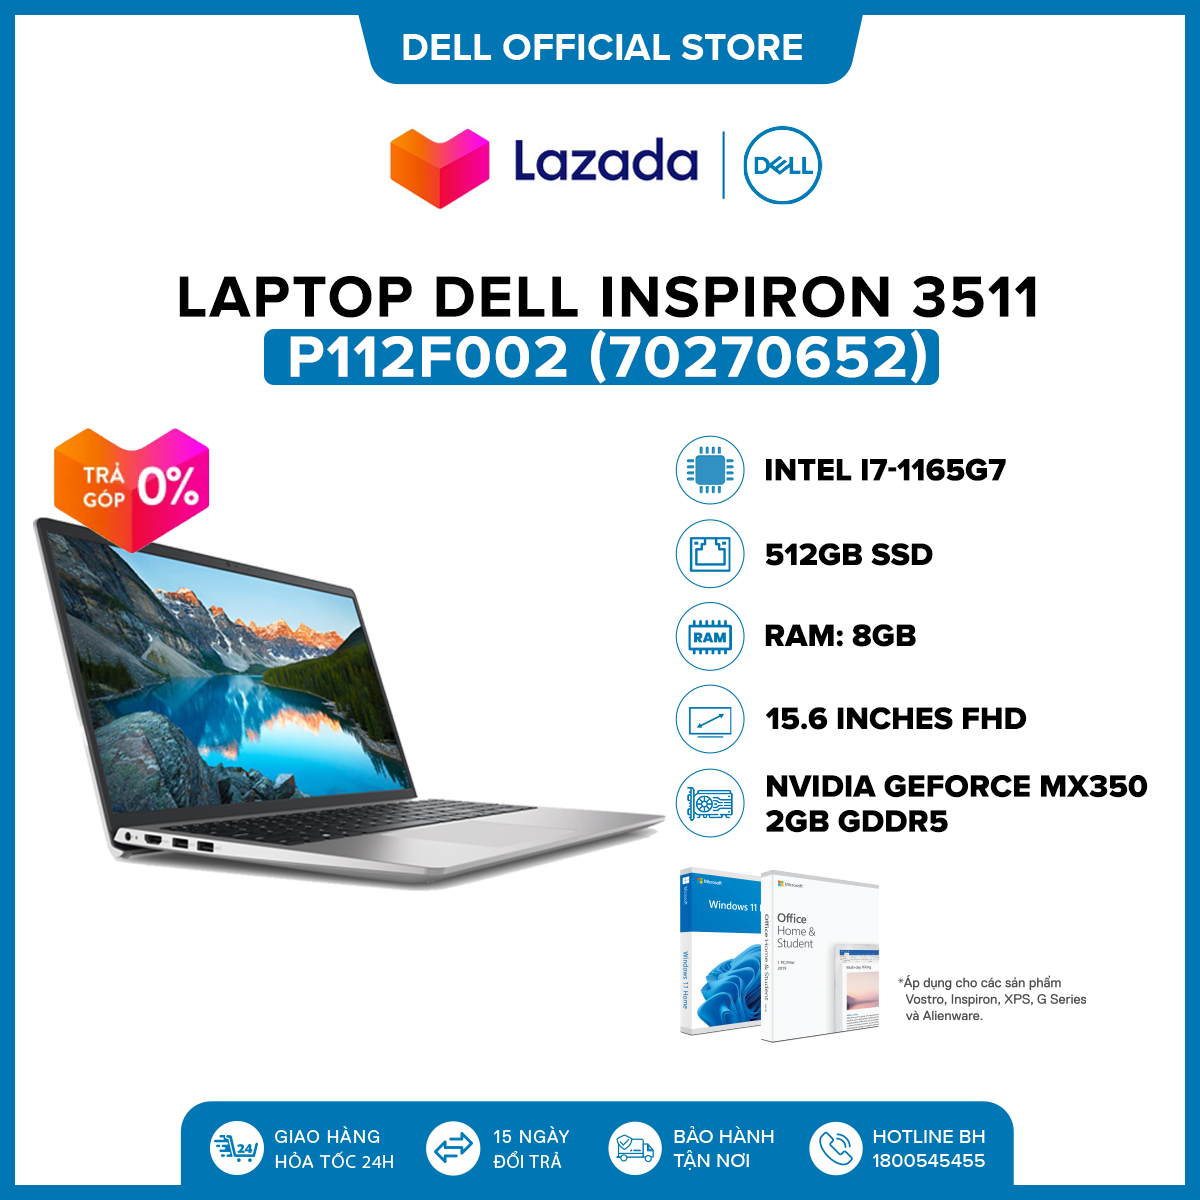 Laptop Dell Inspiron 3511 15.6 inches FHD (Intel / i7-1165G7 / 8GB / 512GB SSD / NVIDIA GeForce MX350, 2GB GDDR5 / McAfeeMDS / Office Home & Student 2021 / Windows 11 / Finger Print ) l Platinum Silver l P112F002 (70270652)